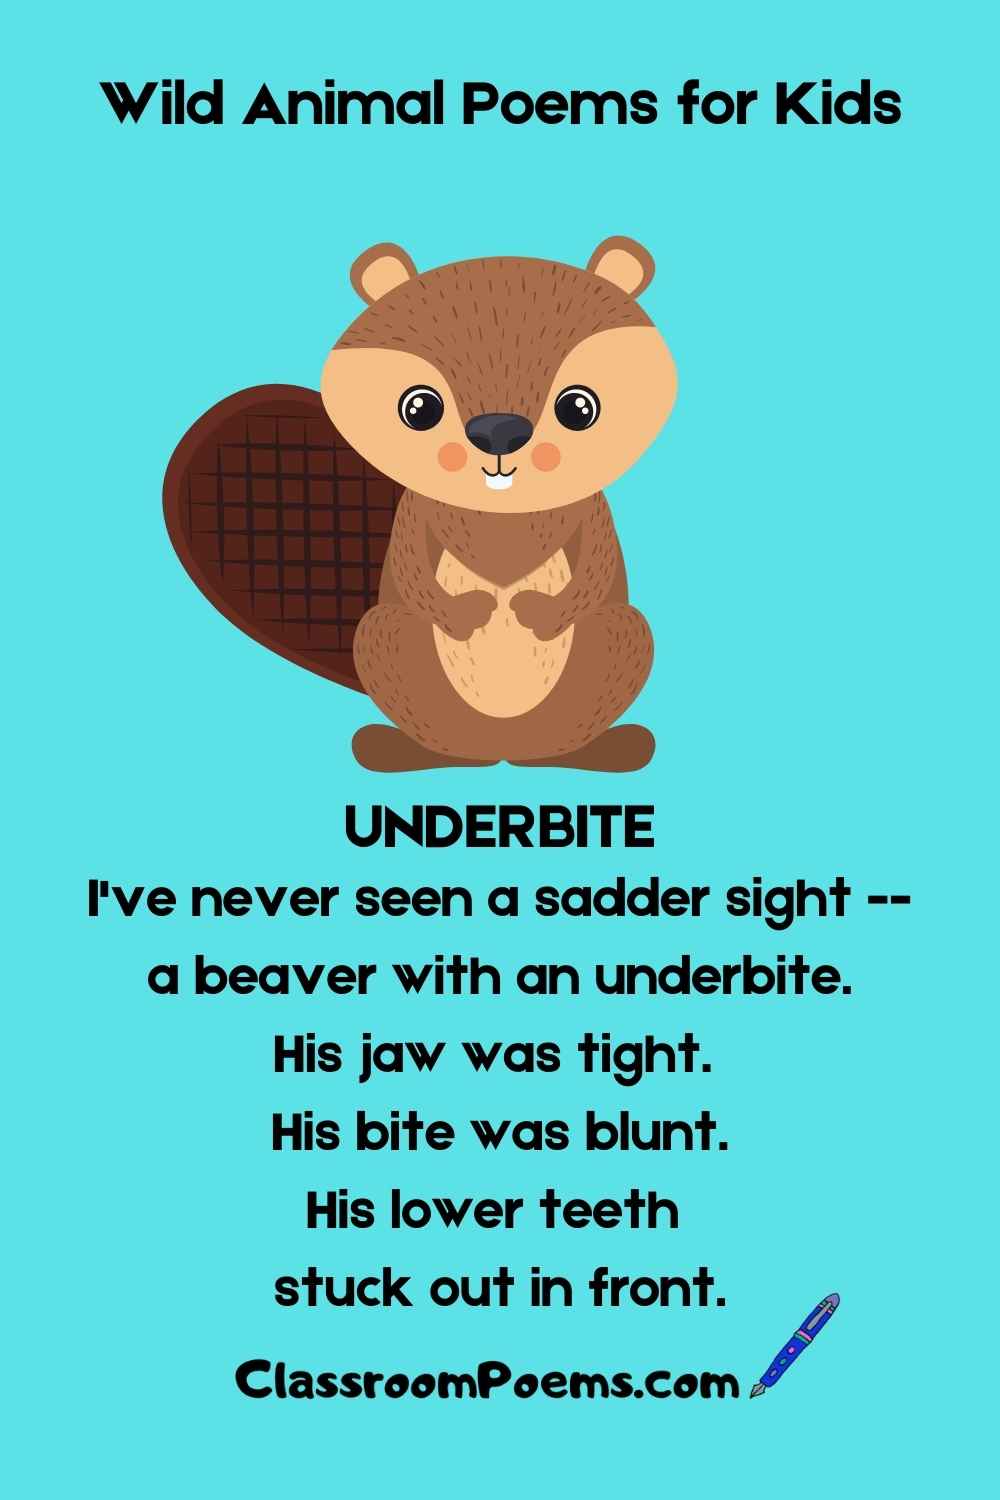 Beaver poem, wild animal poems for kids on ClassroomPoems.com